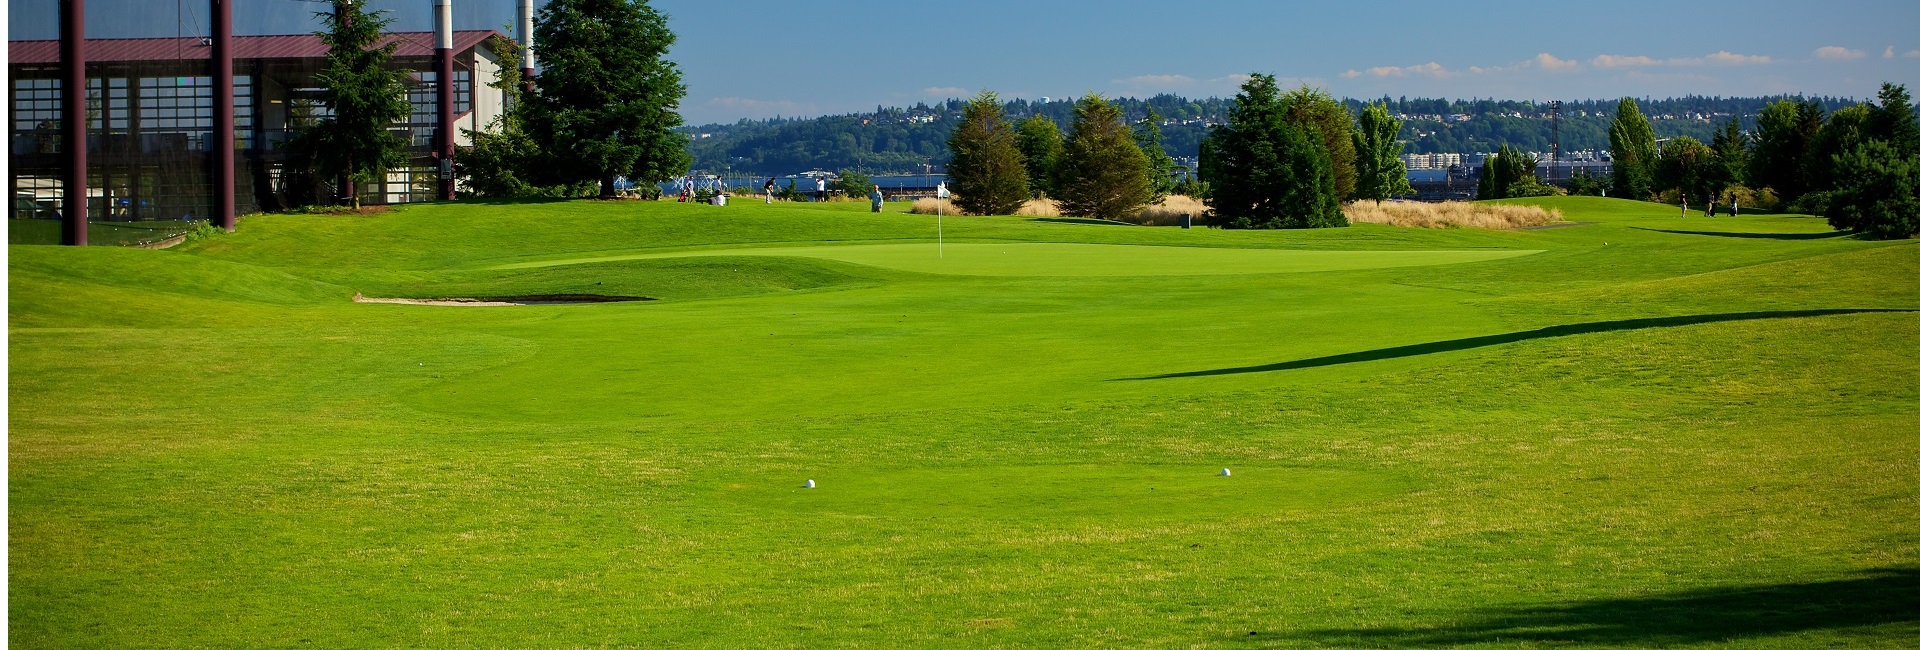 Interbay Golf Course 